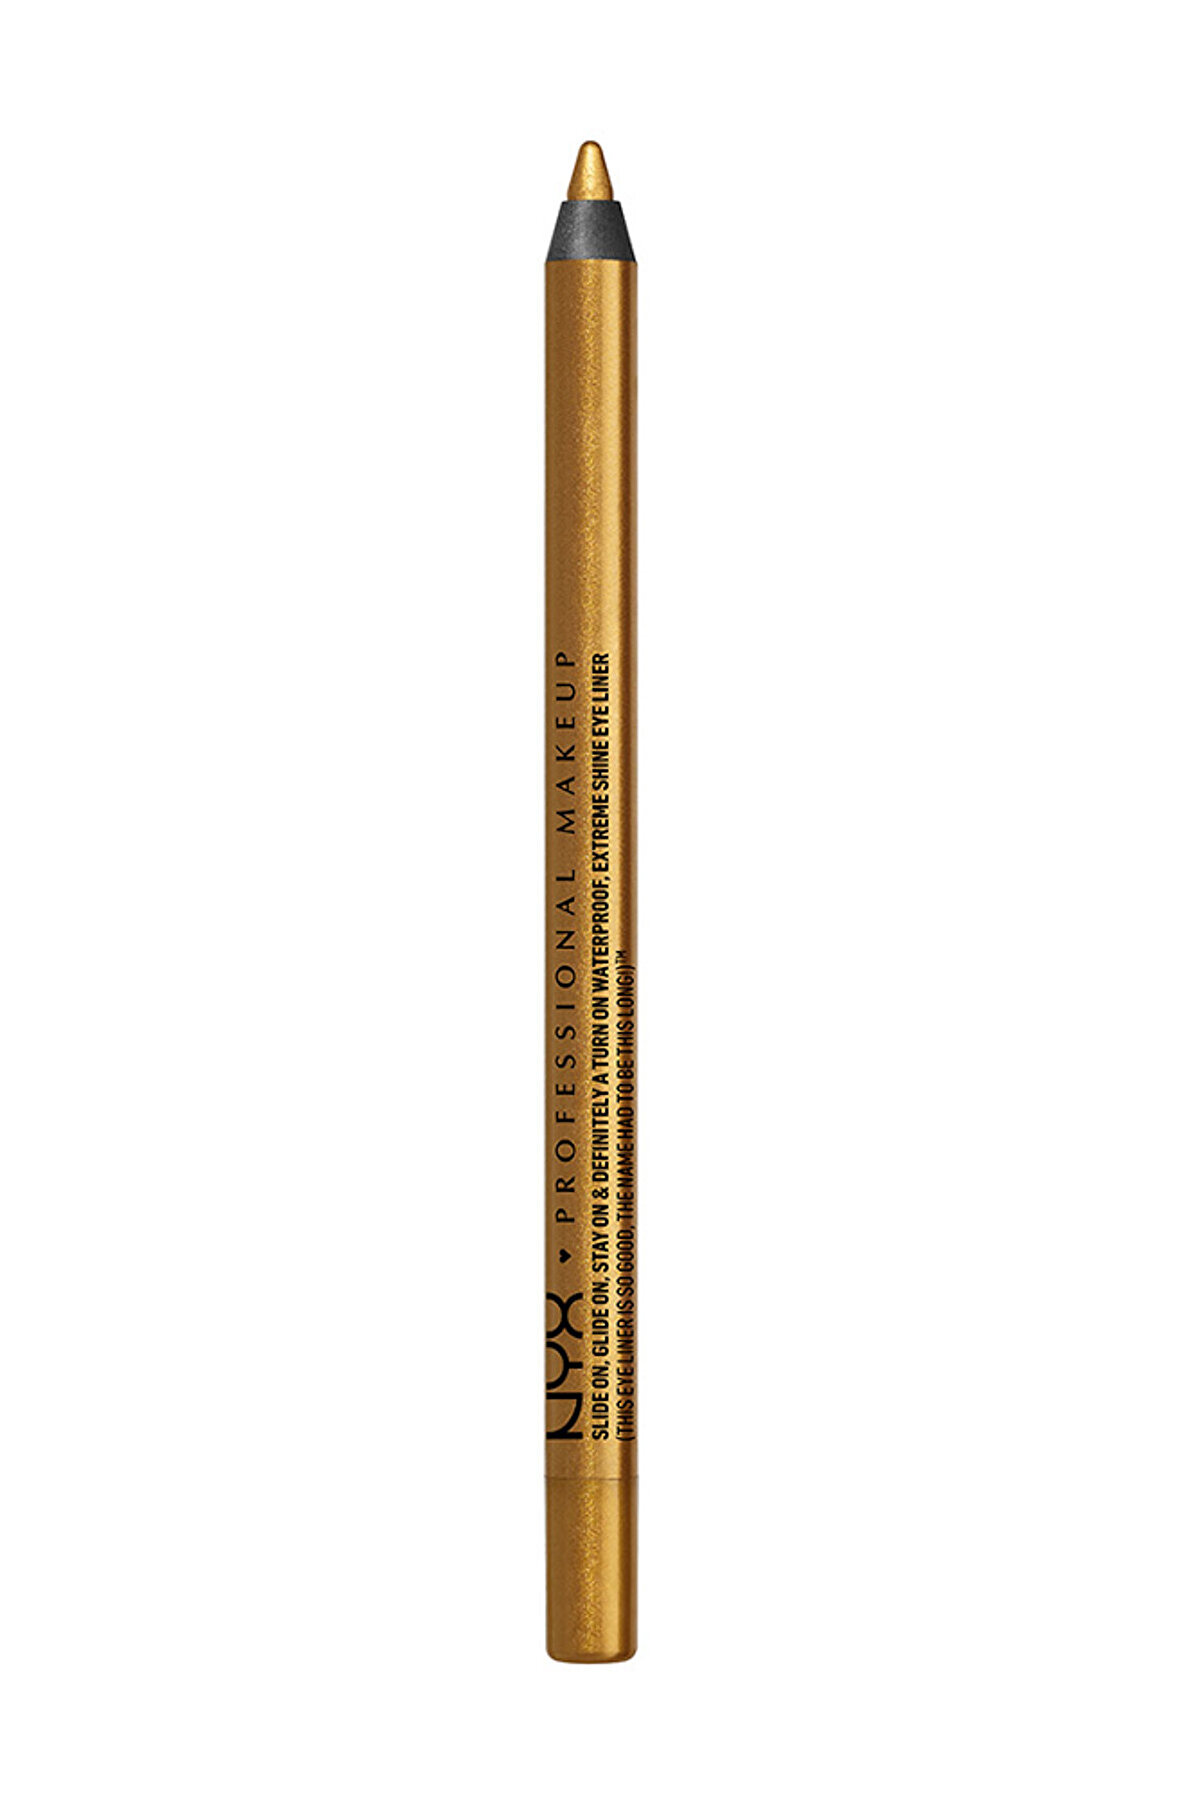 NYX Professional Makeup Altın Göz Kalemi - Slide on Eye Pencil Glitzy Gold 6 g 800897141332